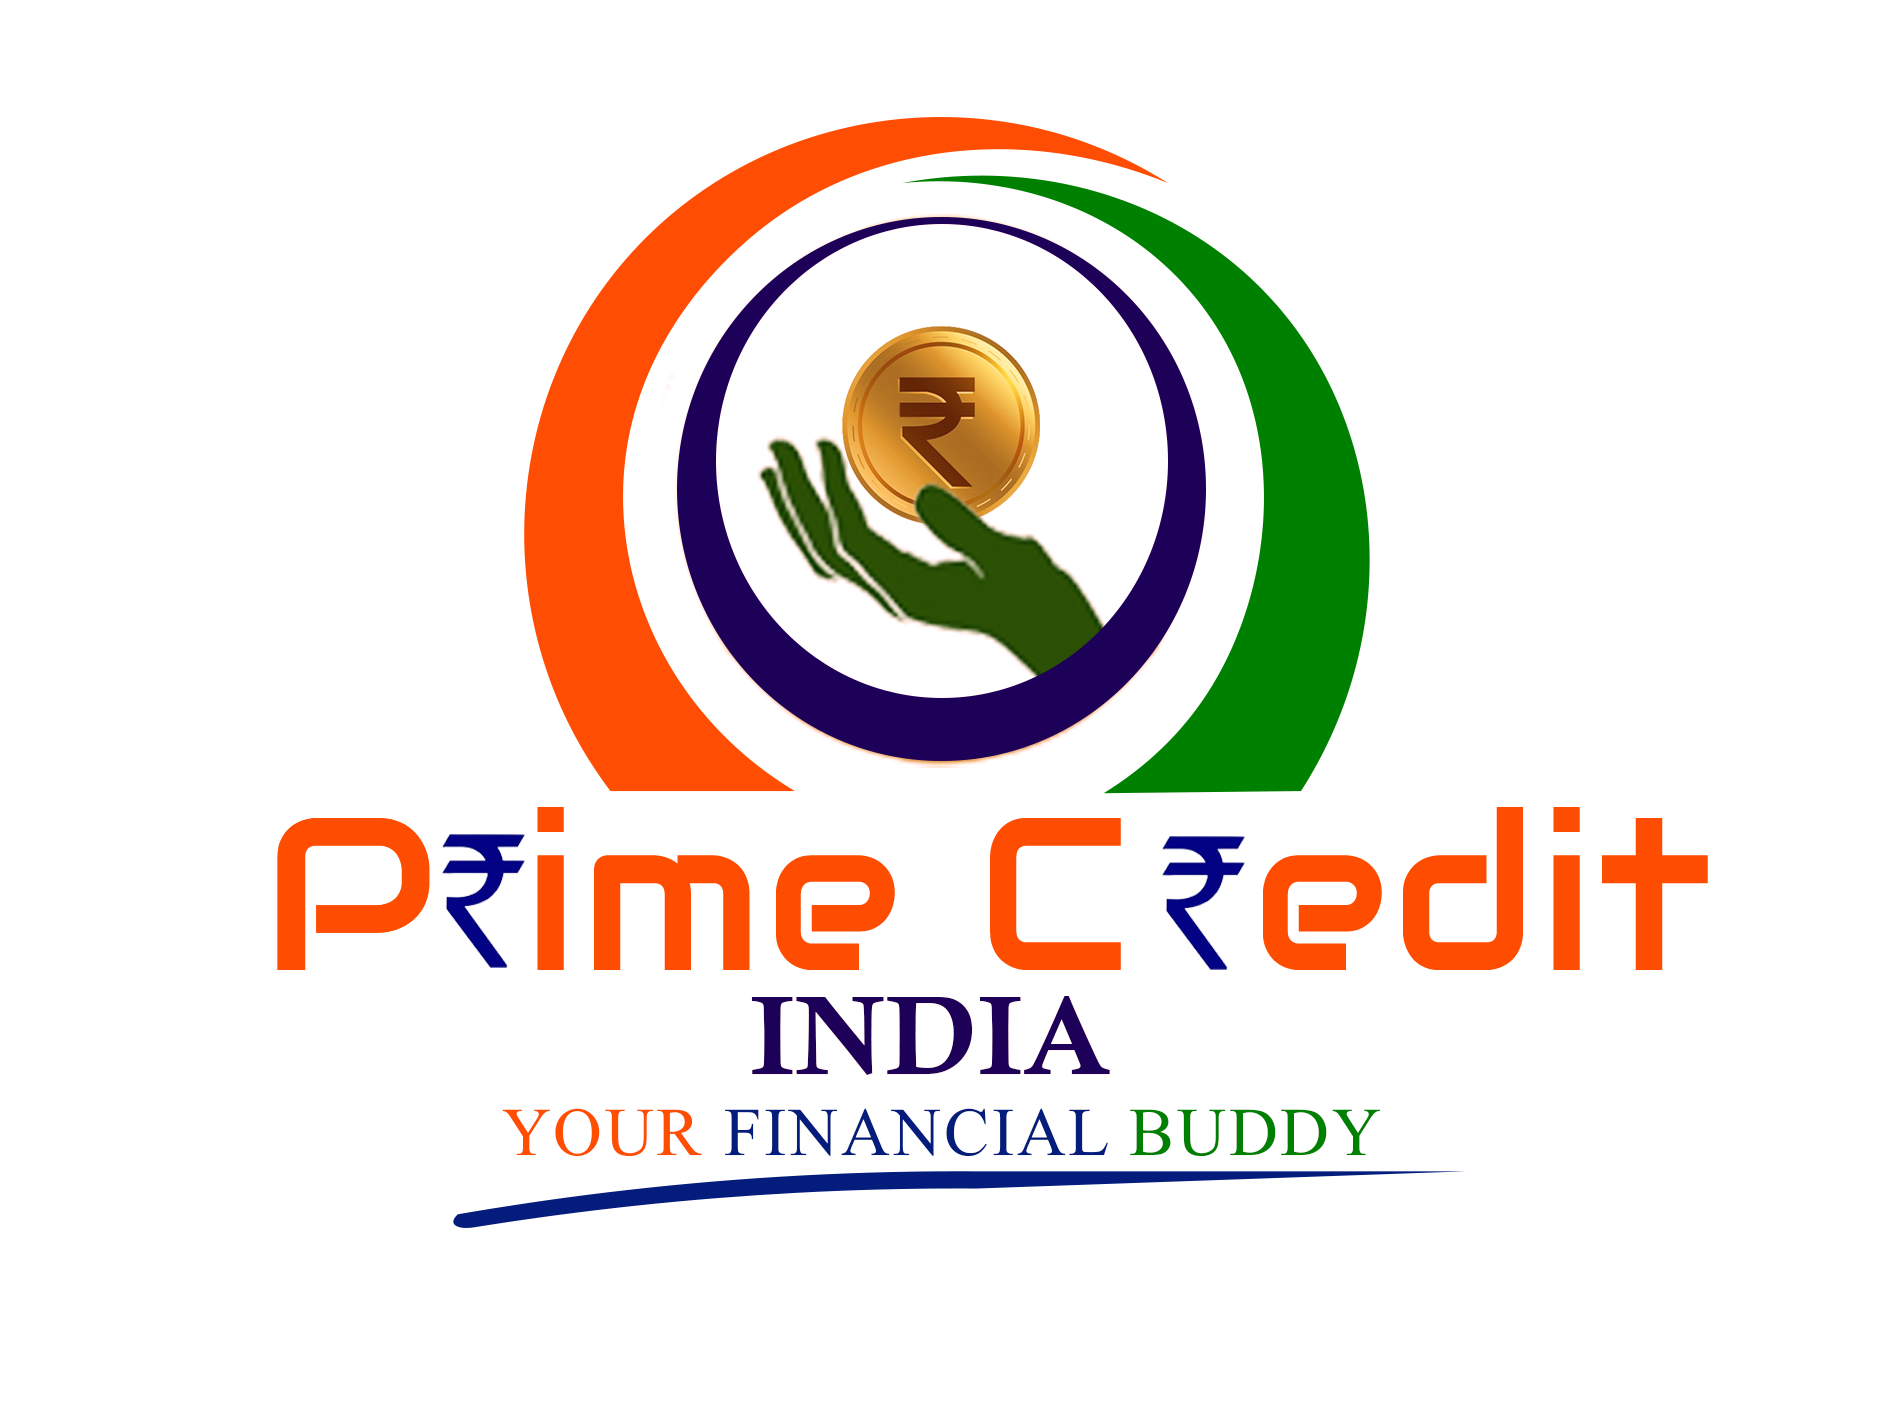 Prime Credit India